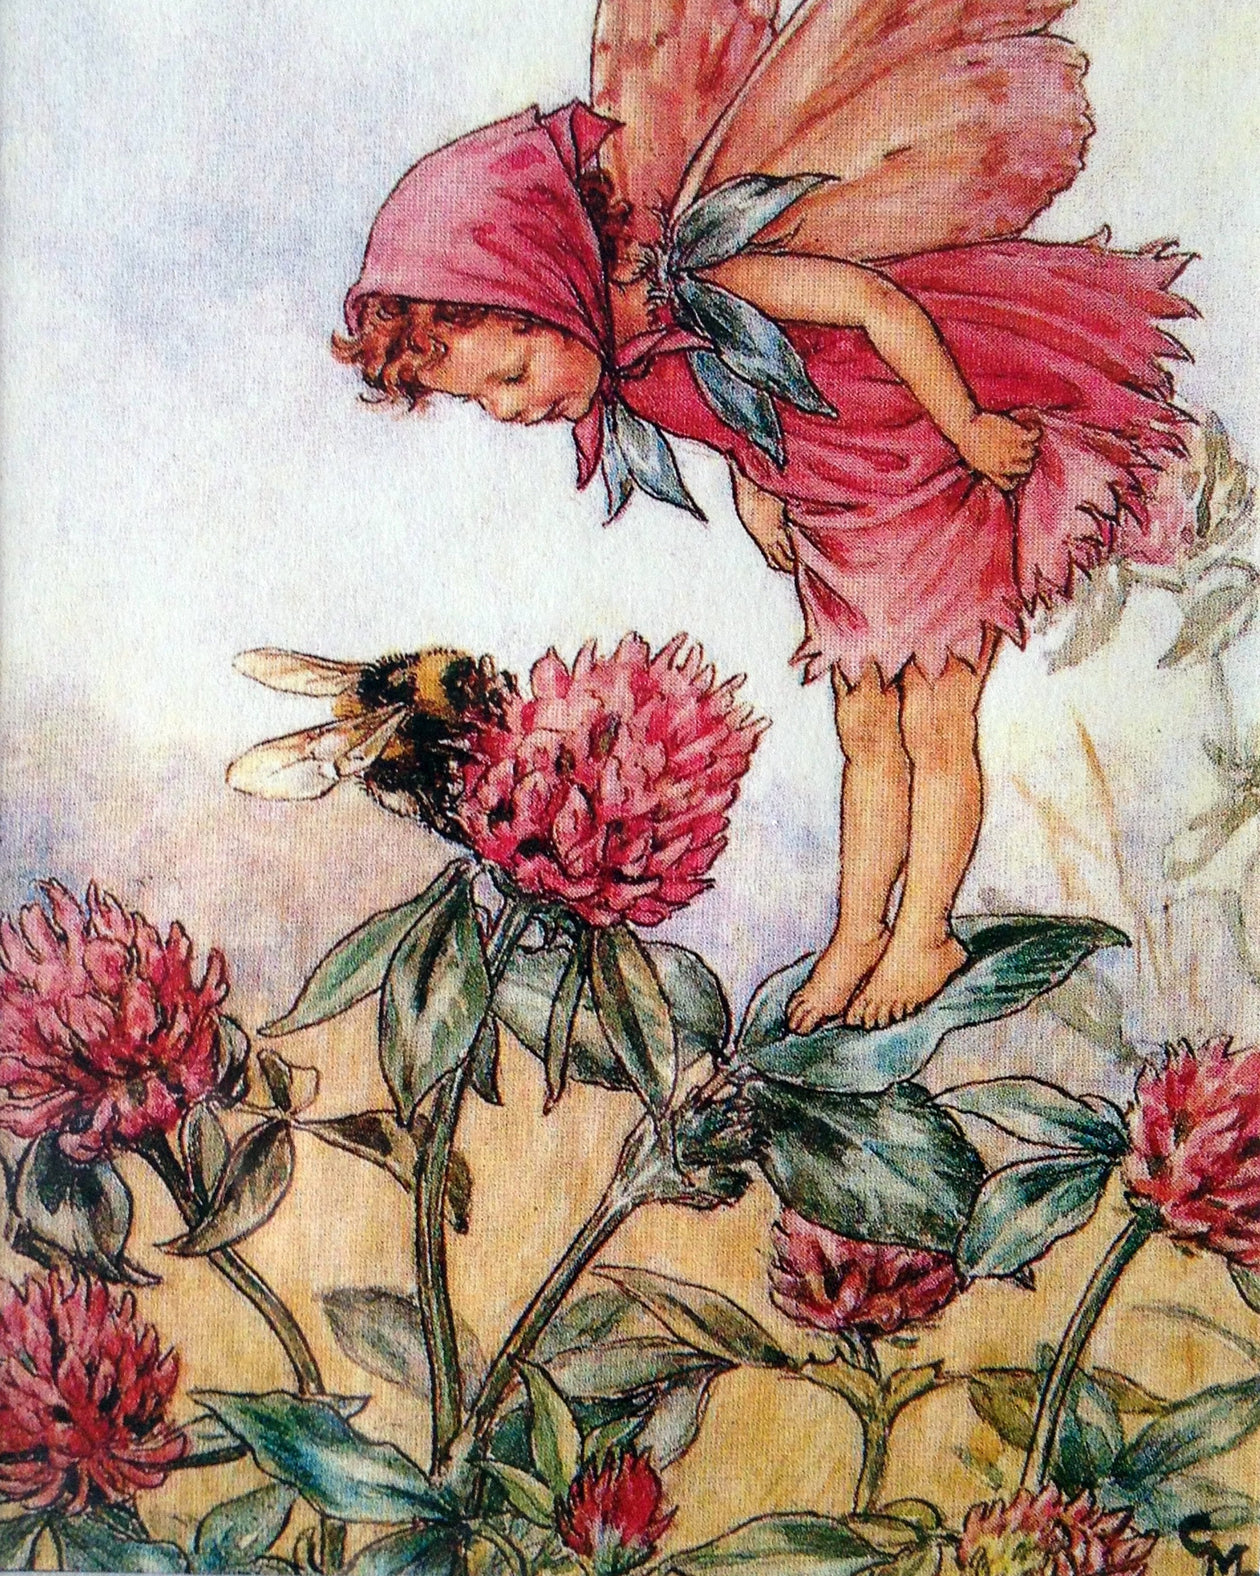 Flower Fairy Print: The Red Clover Fairy